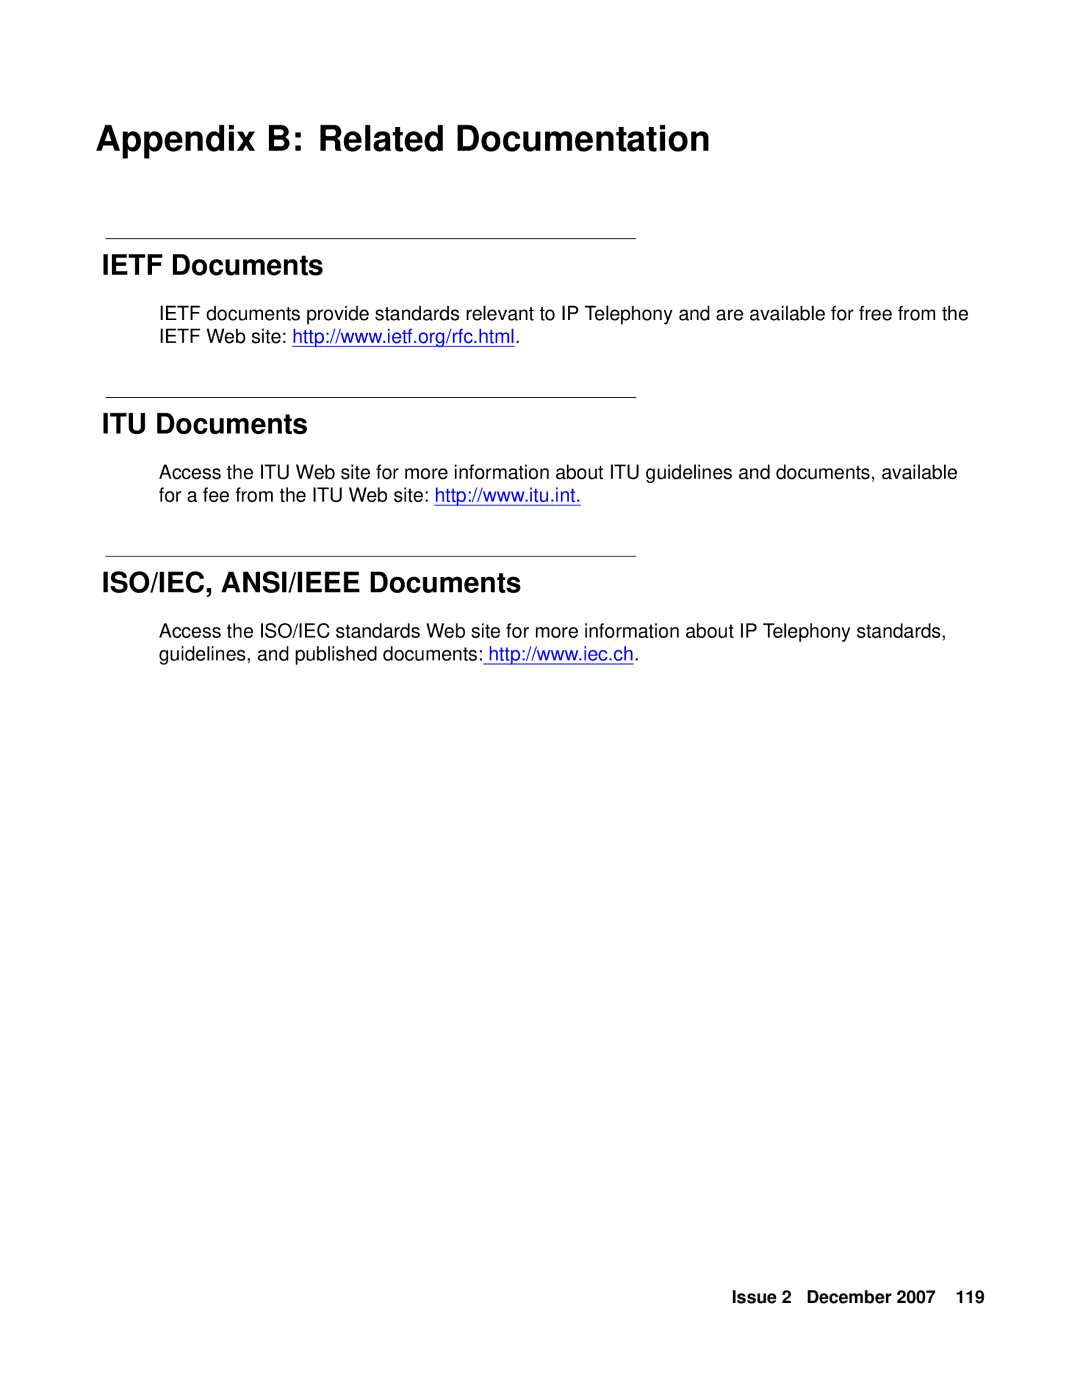 Avaya 9600 manual Appendix B Related Documentation, Ietf Documents ITU Documents ISO/IEC, ANSI/IEEE Documents 